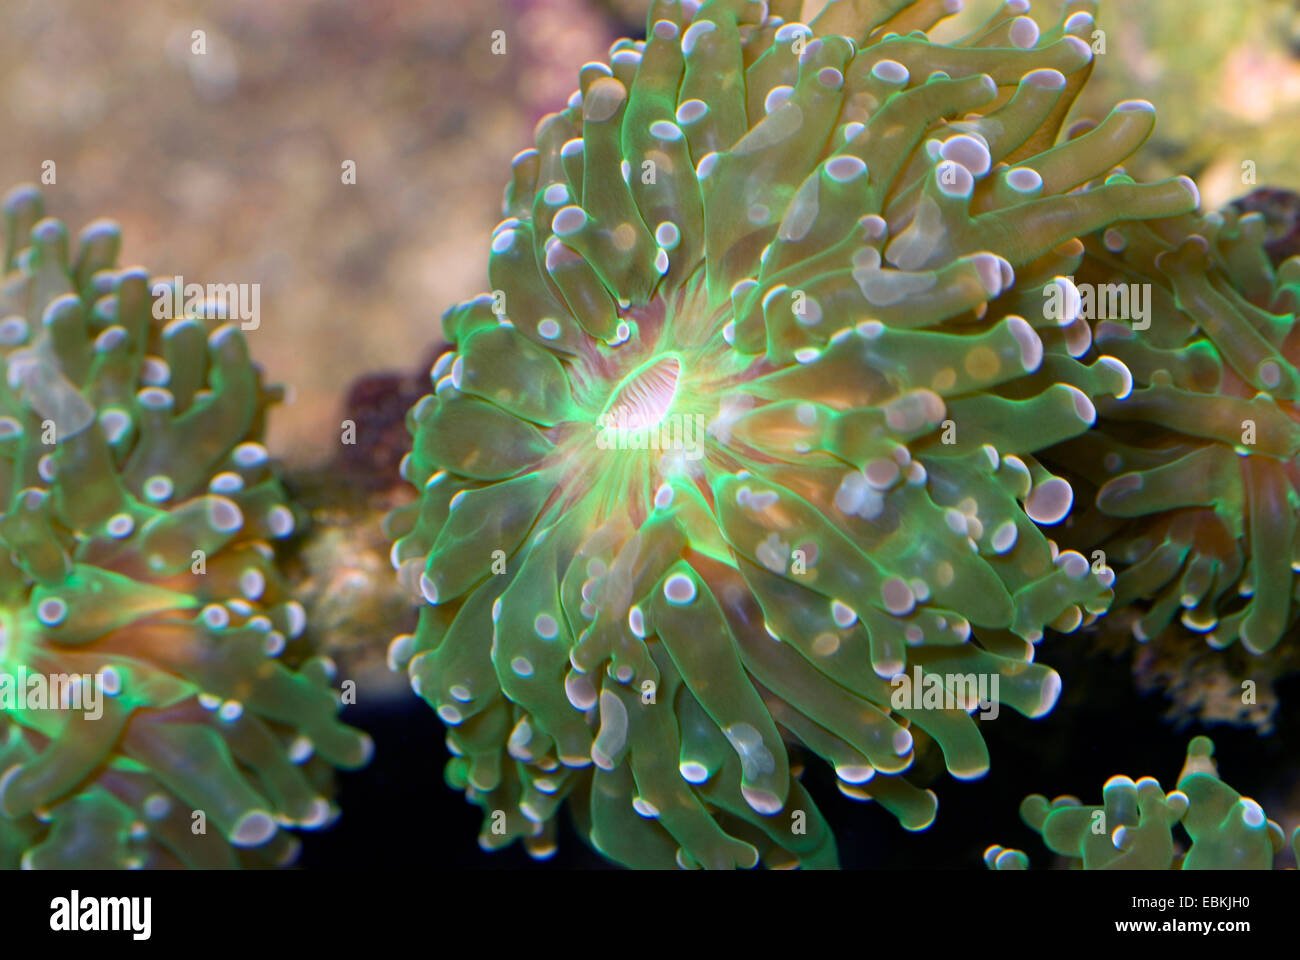 Frogspawn coral (Euphyllia paradivisa), close-up view Stock Photo